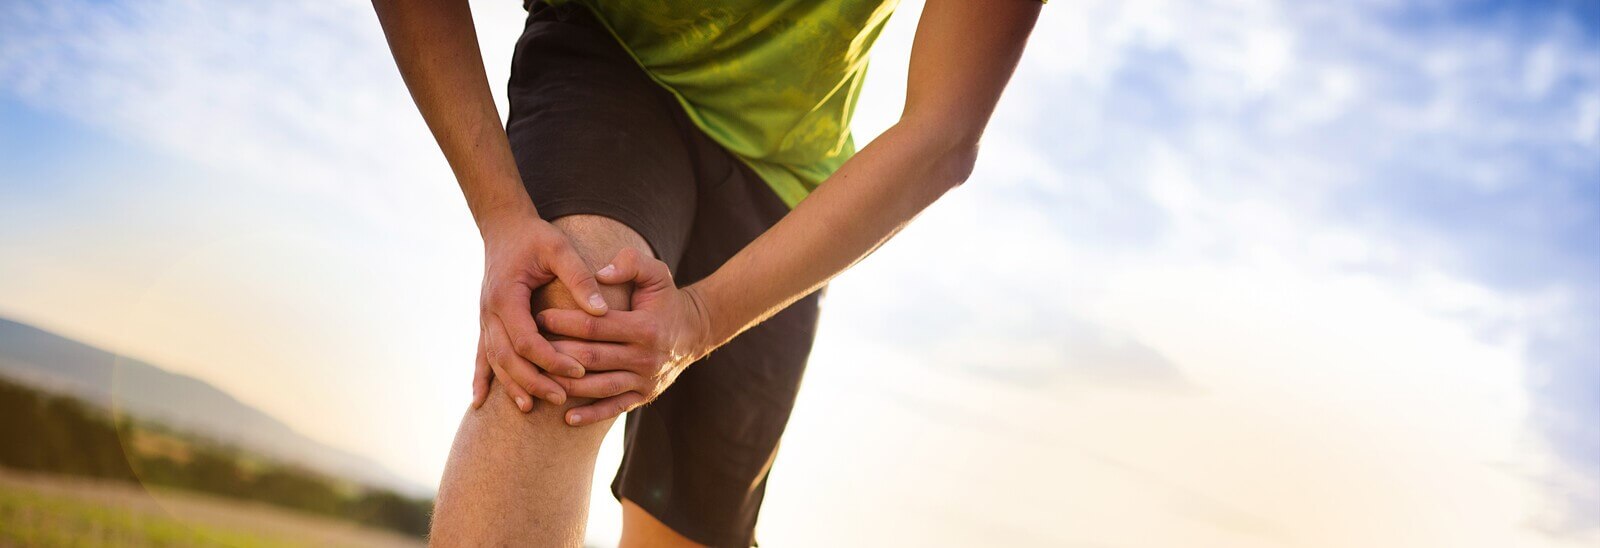 Man suffering from knee sprain pain stops running